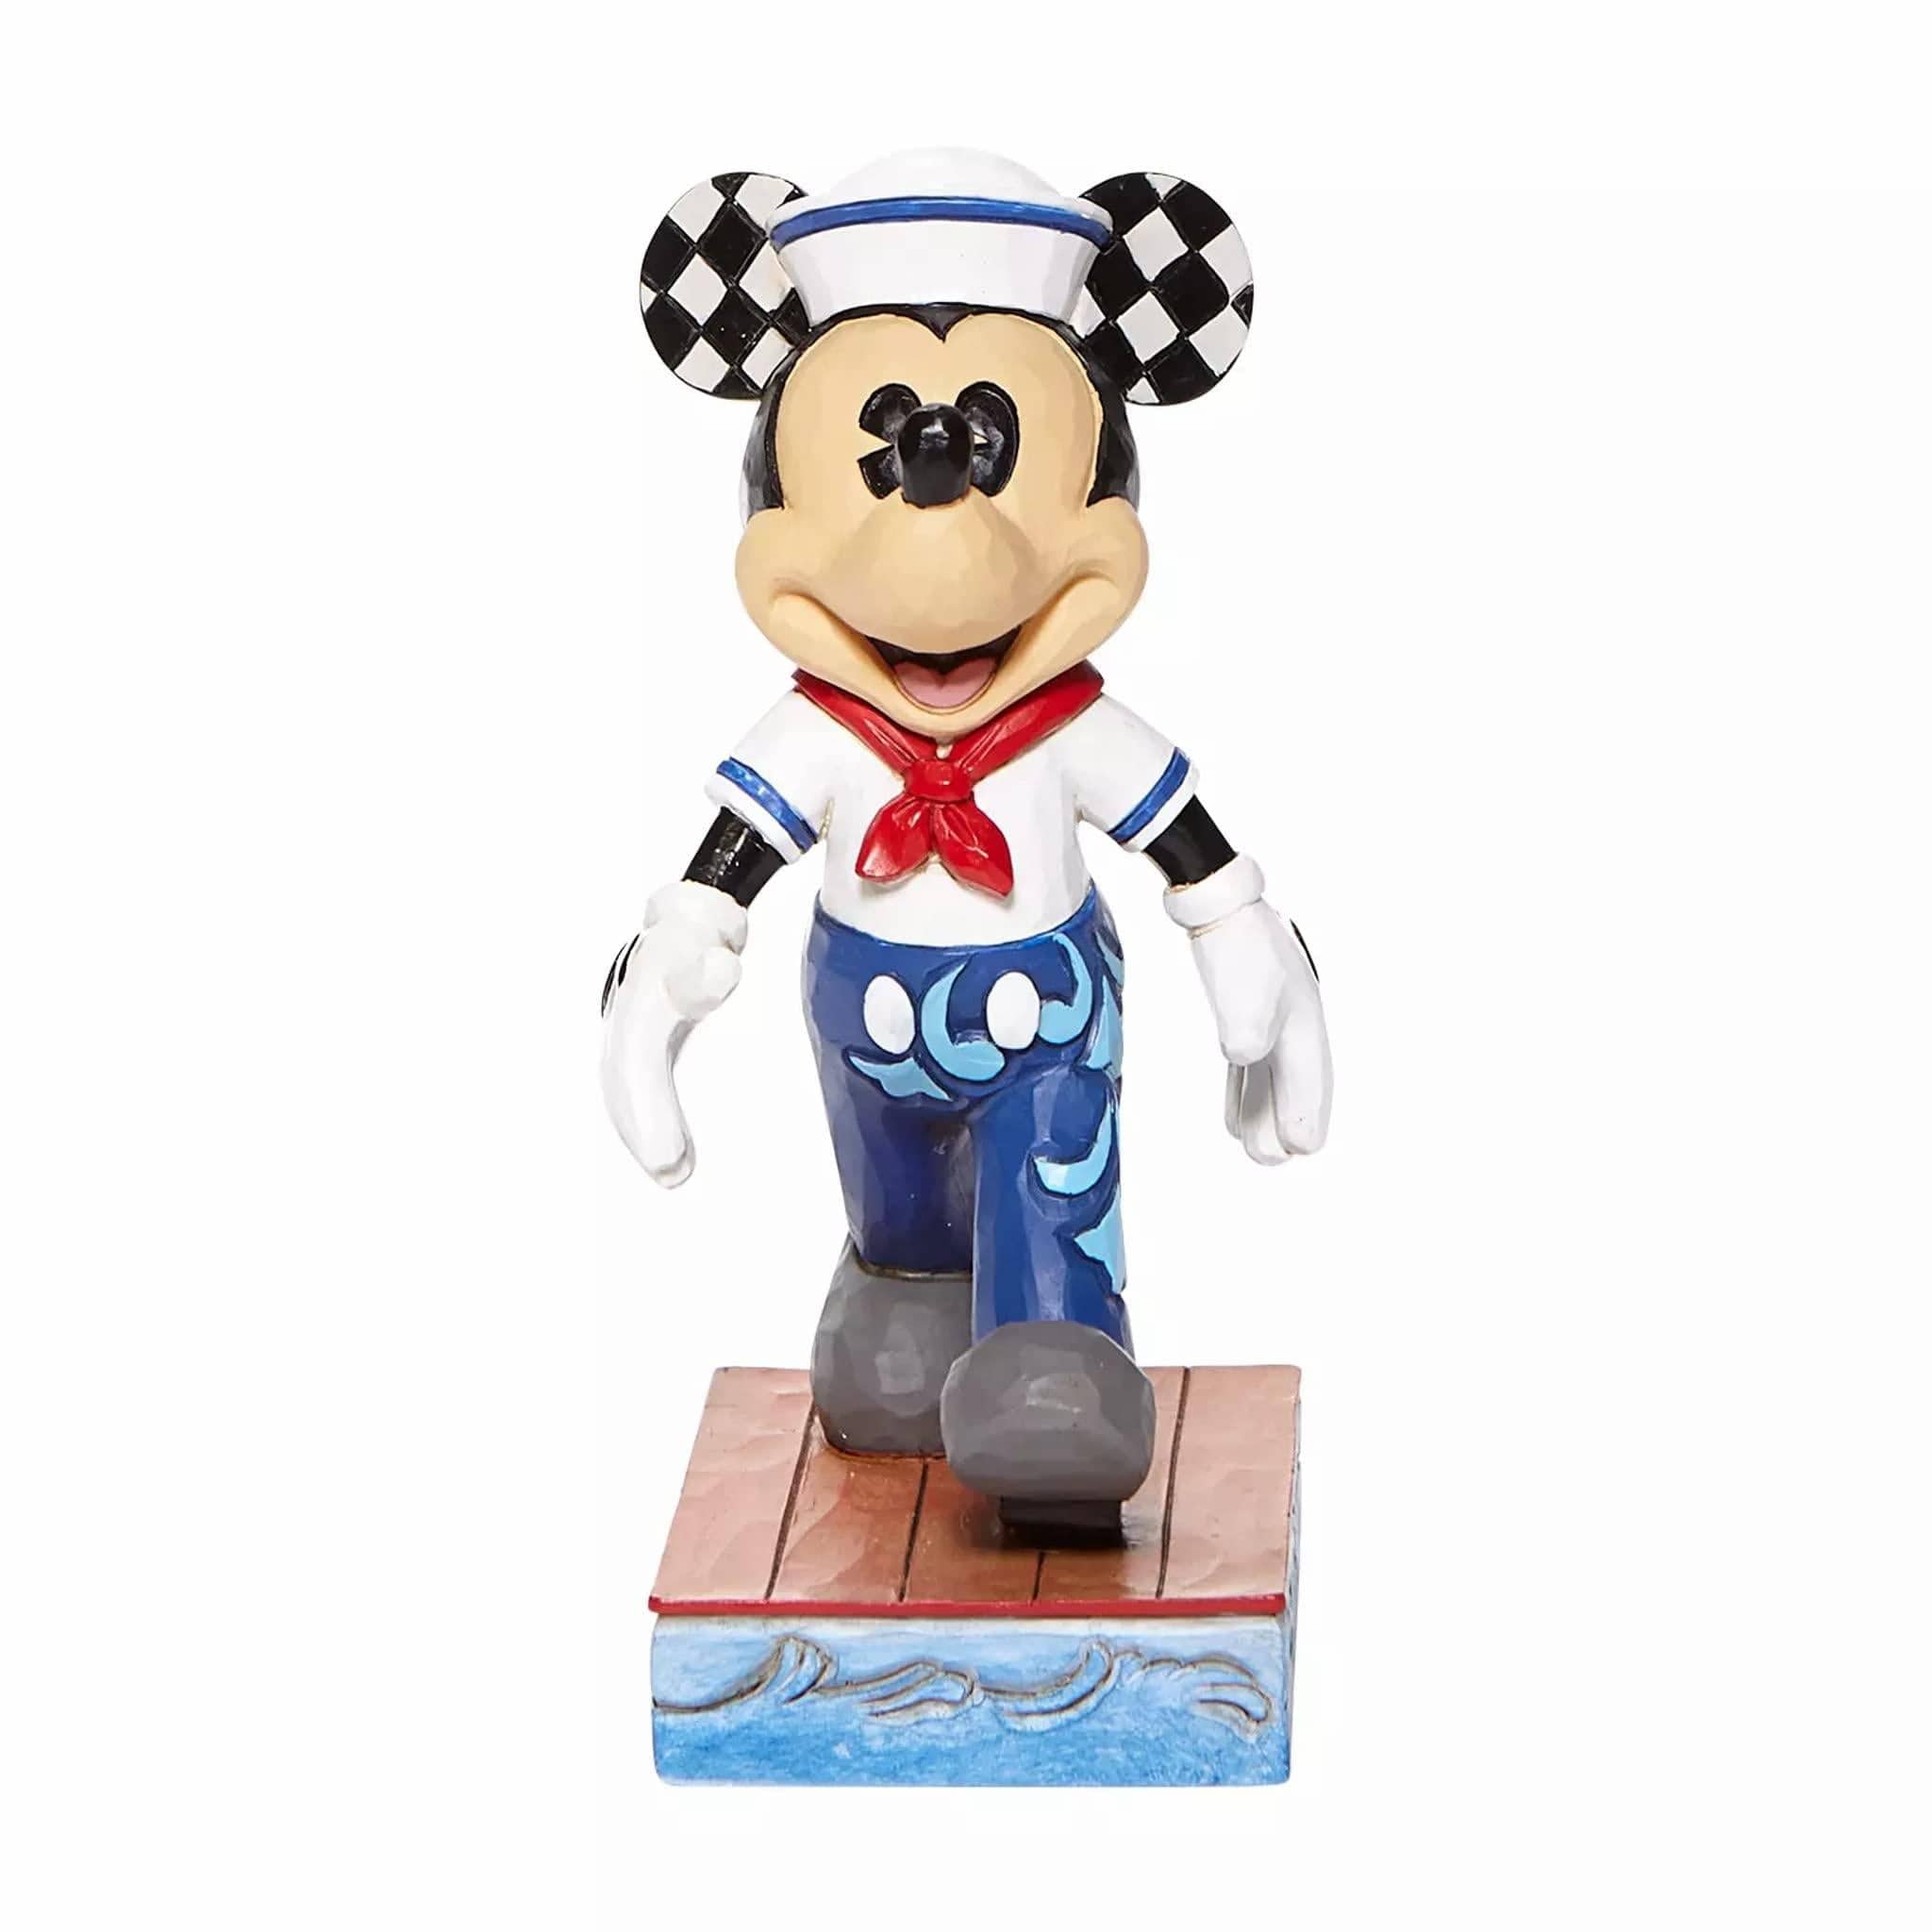 Enesco Disney Ornament Disney Traditions Figurine - Snazzy Sailor (Mickey Mouse Sailor)